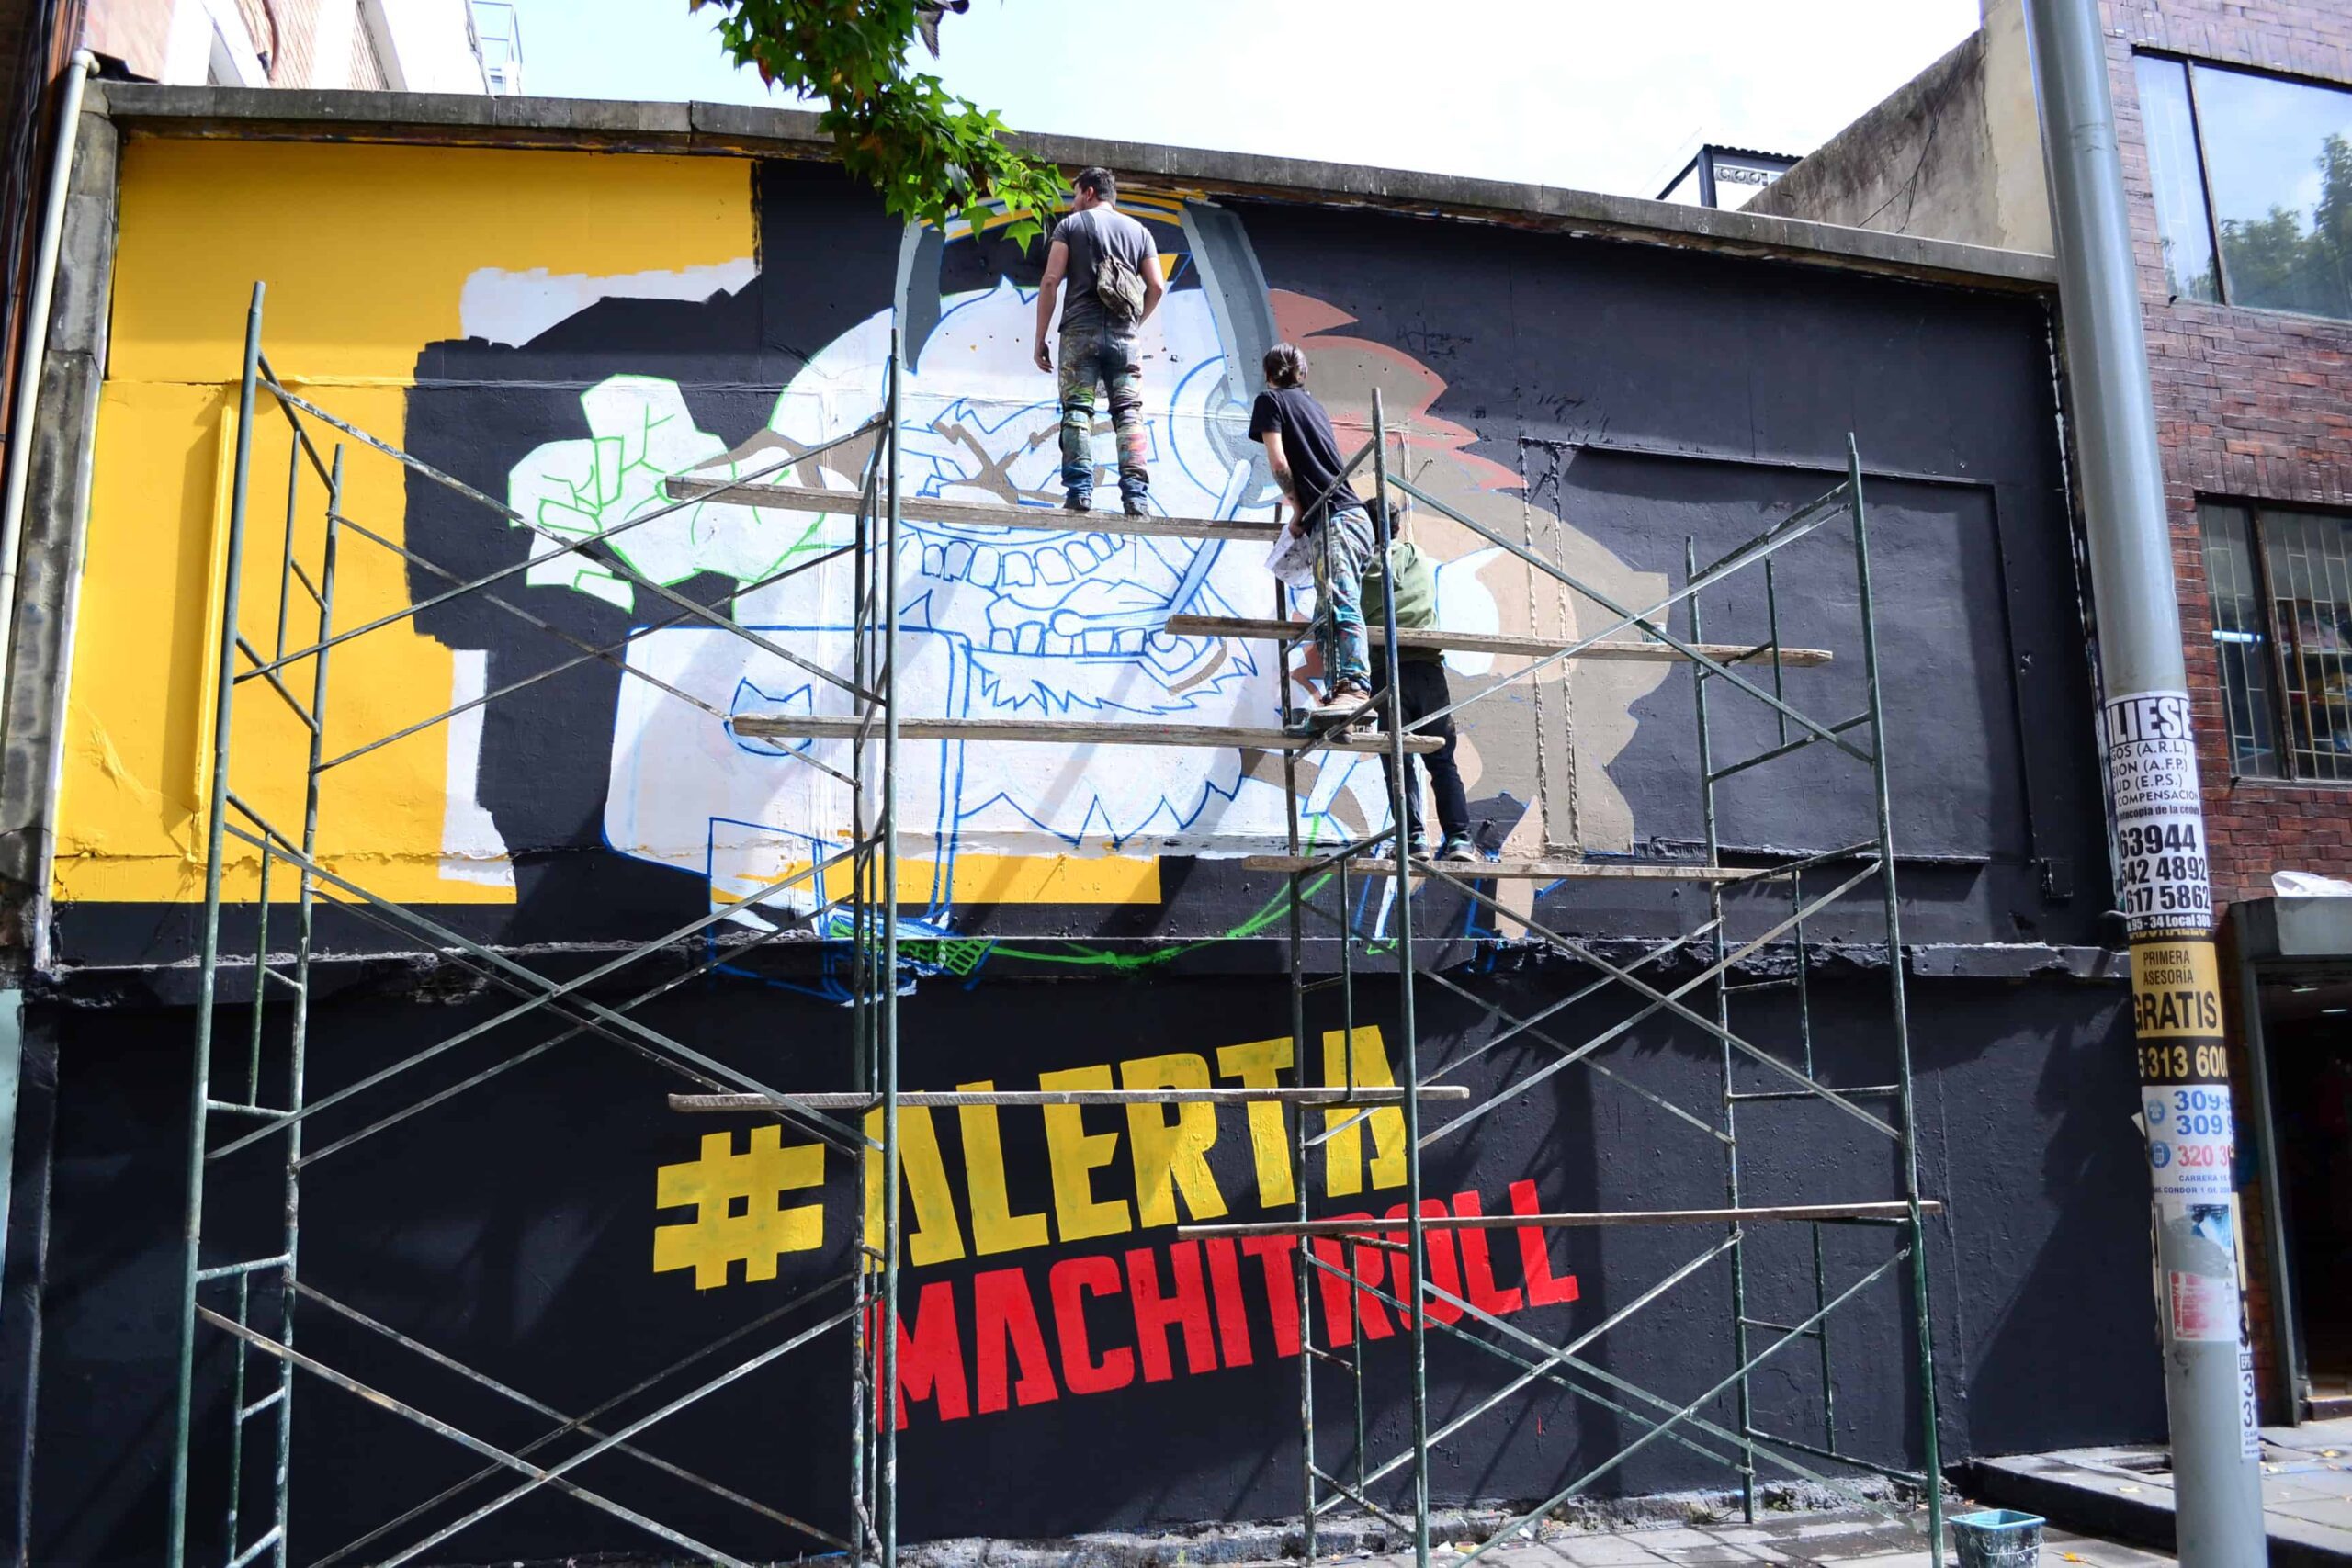 Painters paint a mural from a scaffold - #Alerta Machitroll